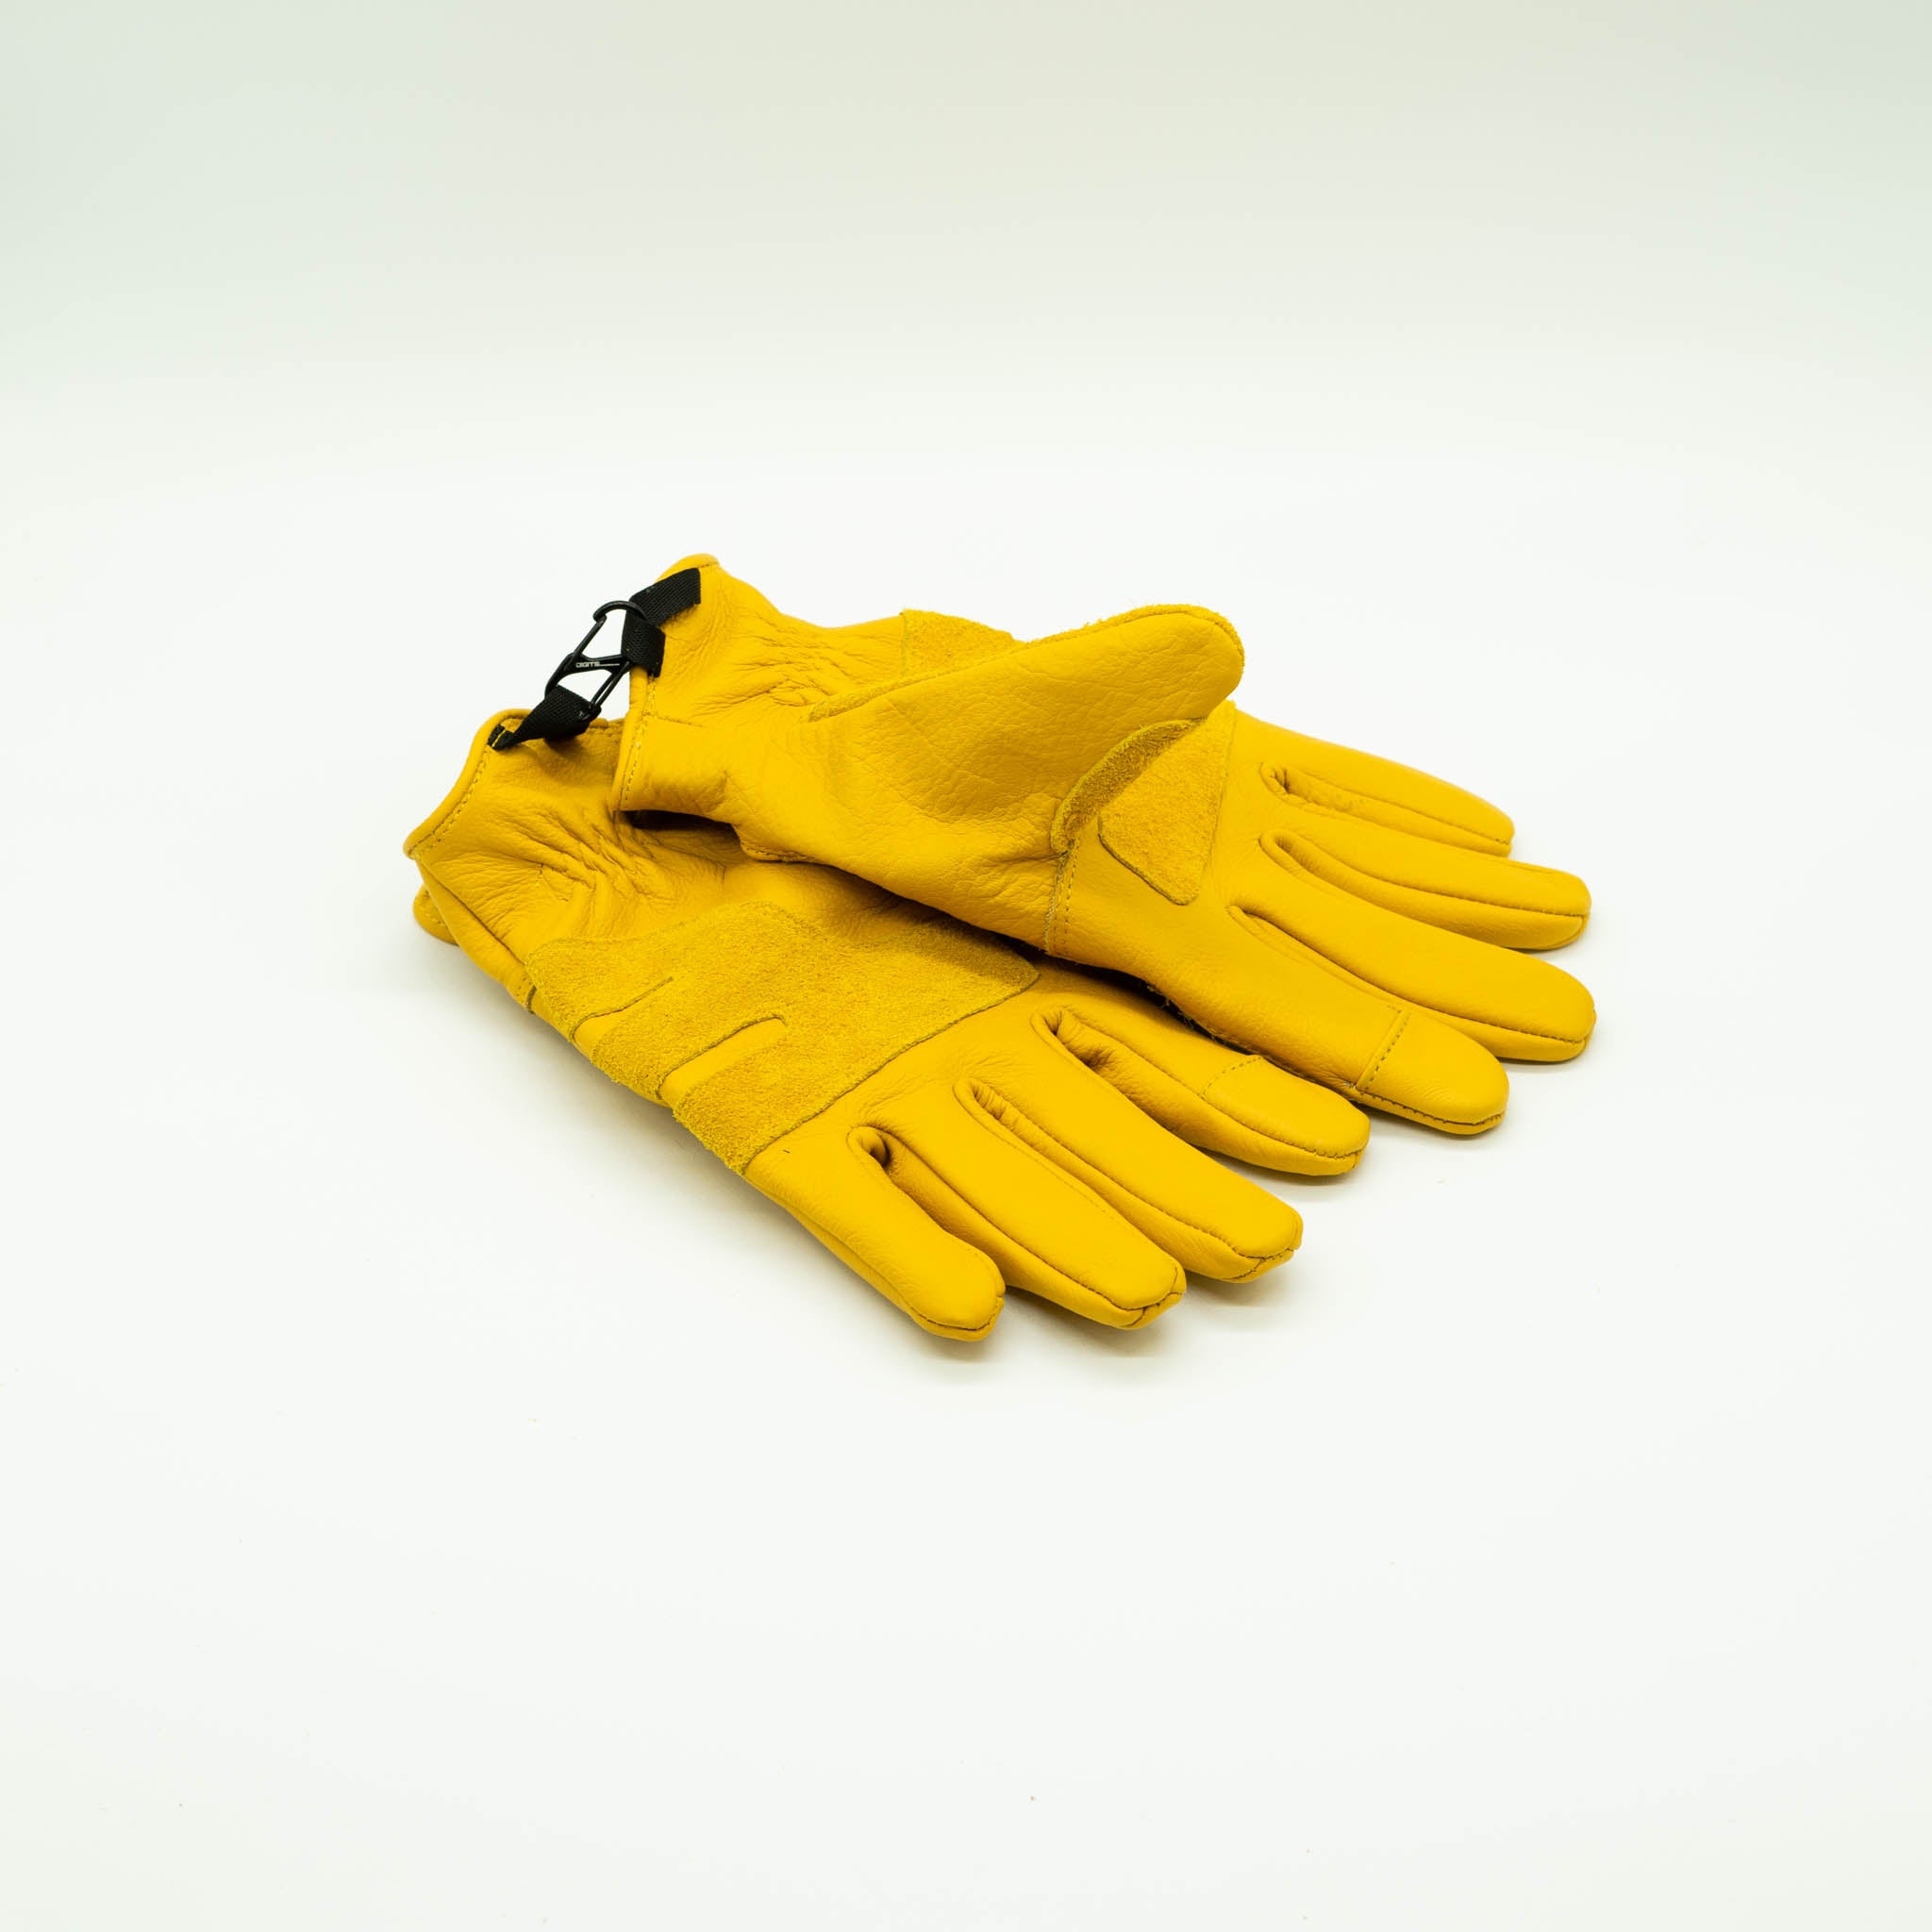 Digits Workwear Leather Work Gloves